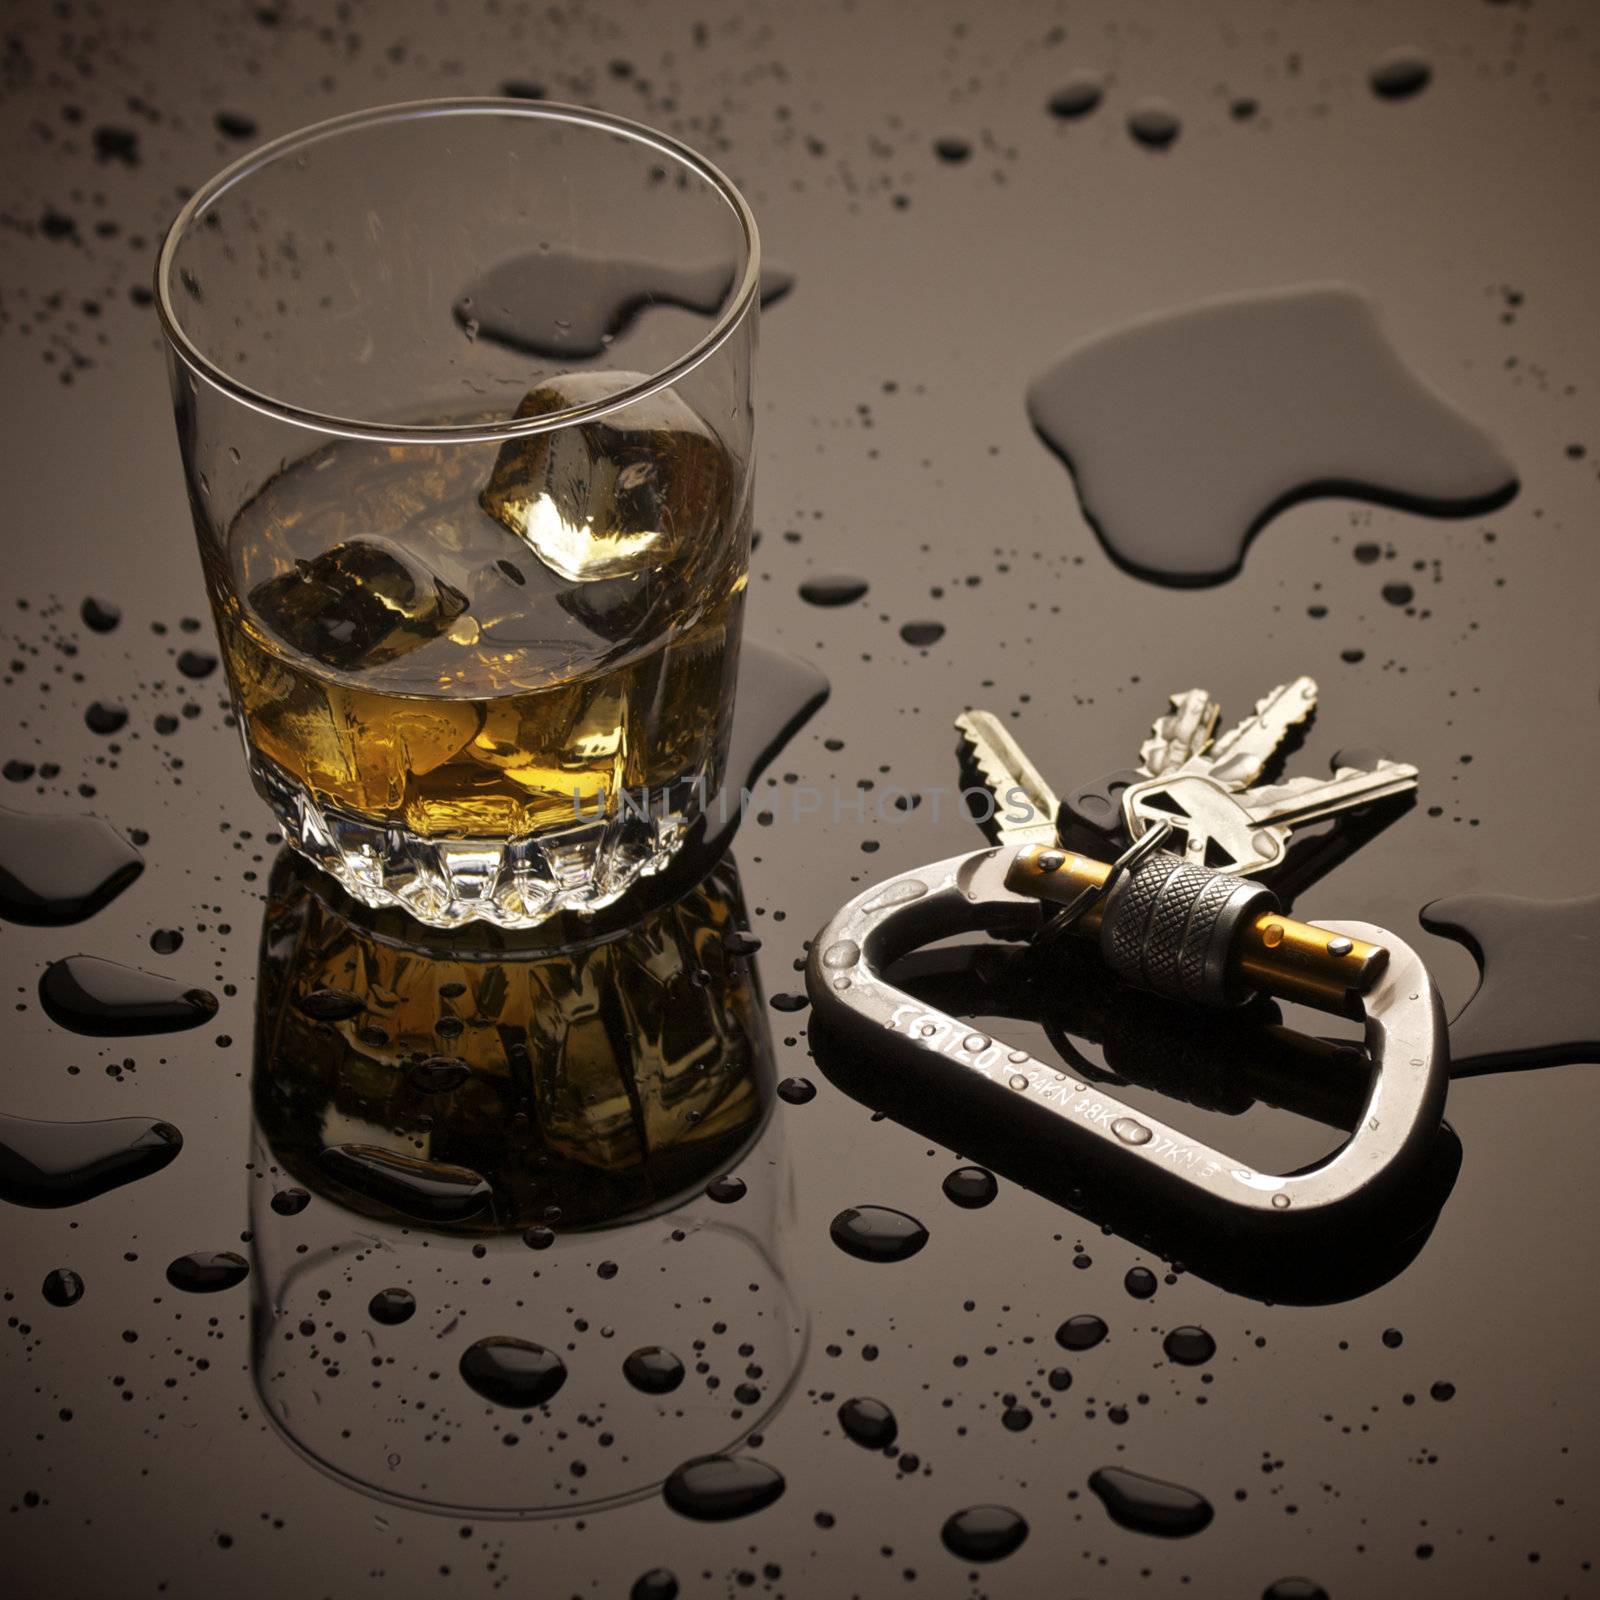 Hard Liquor and Car Keys sitting on a Bar with Spilled Liquid.